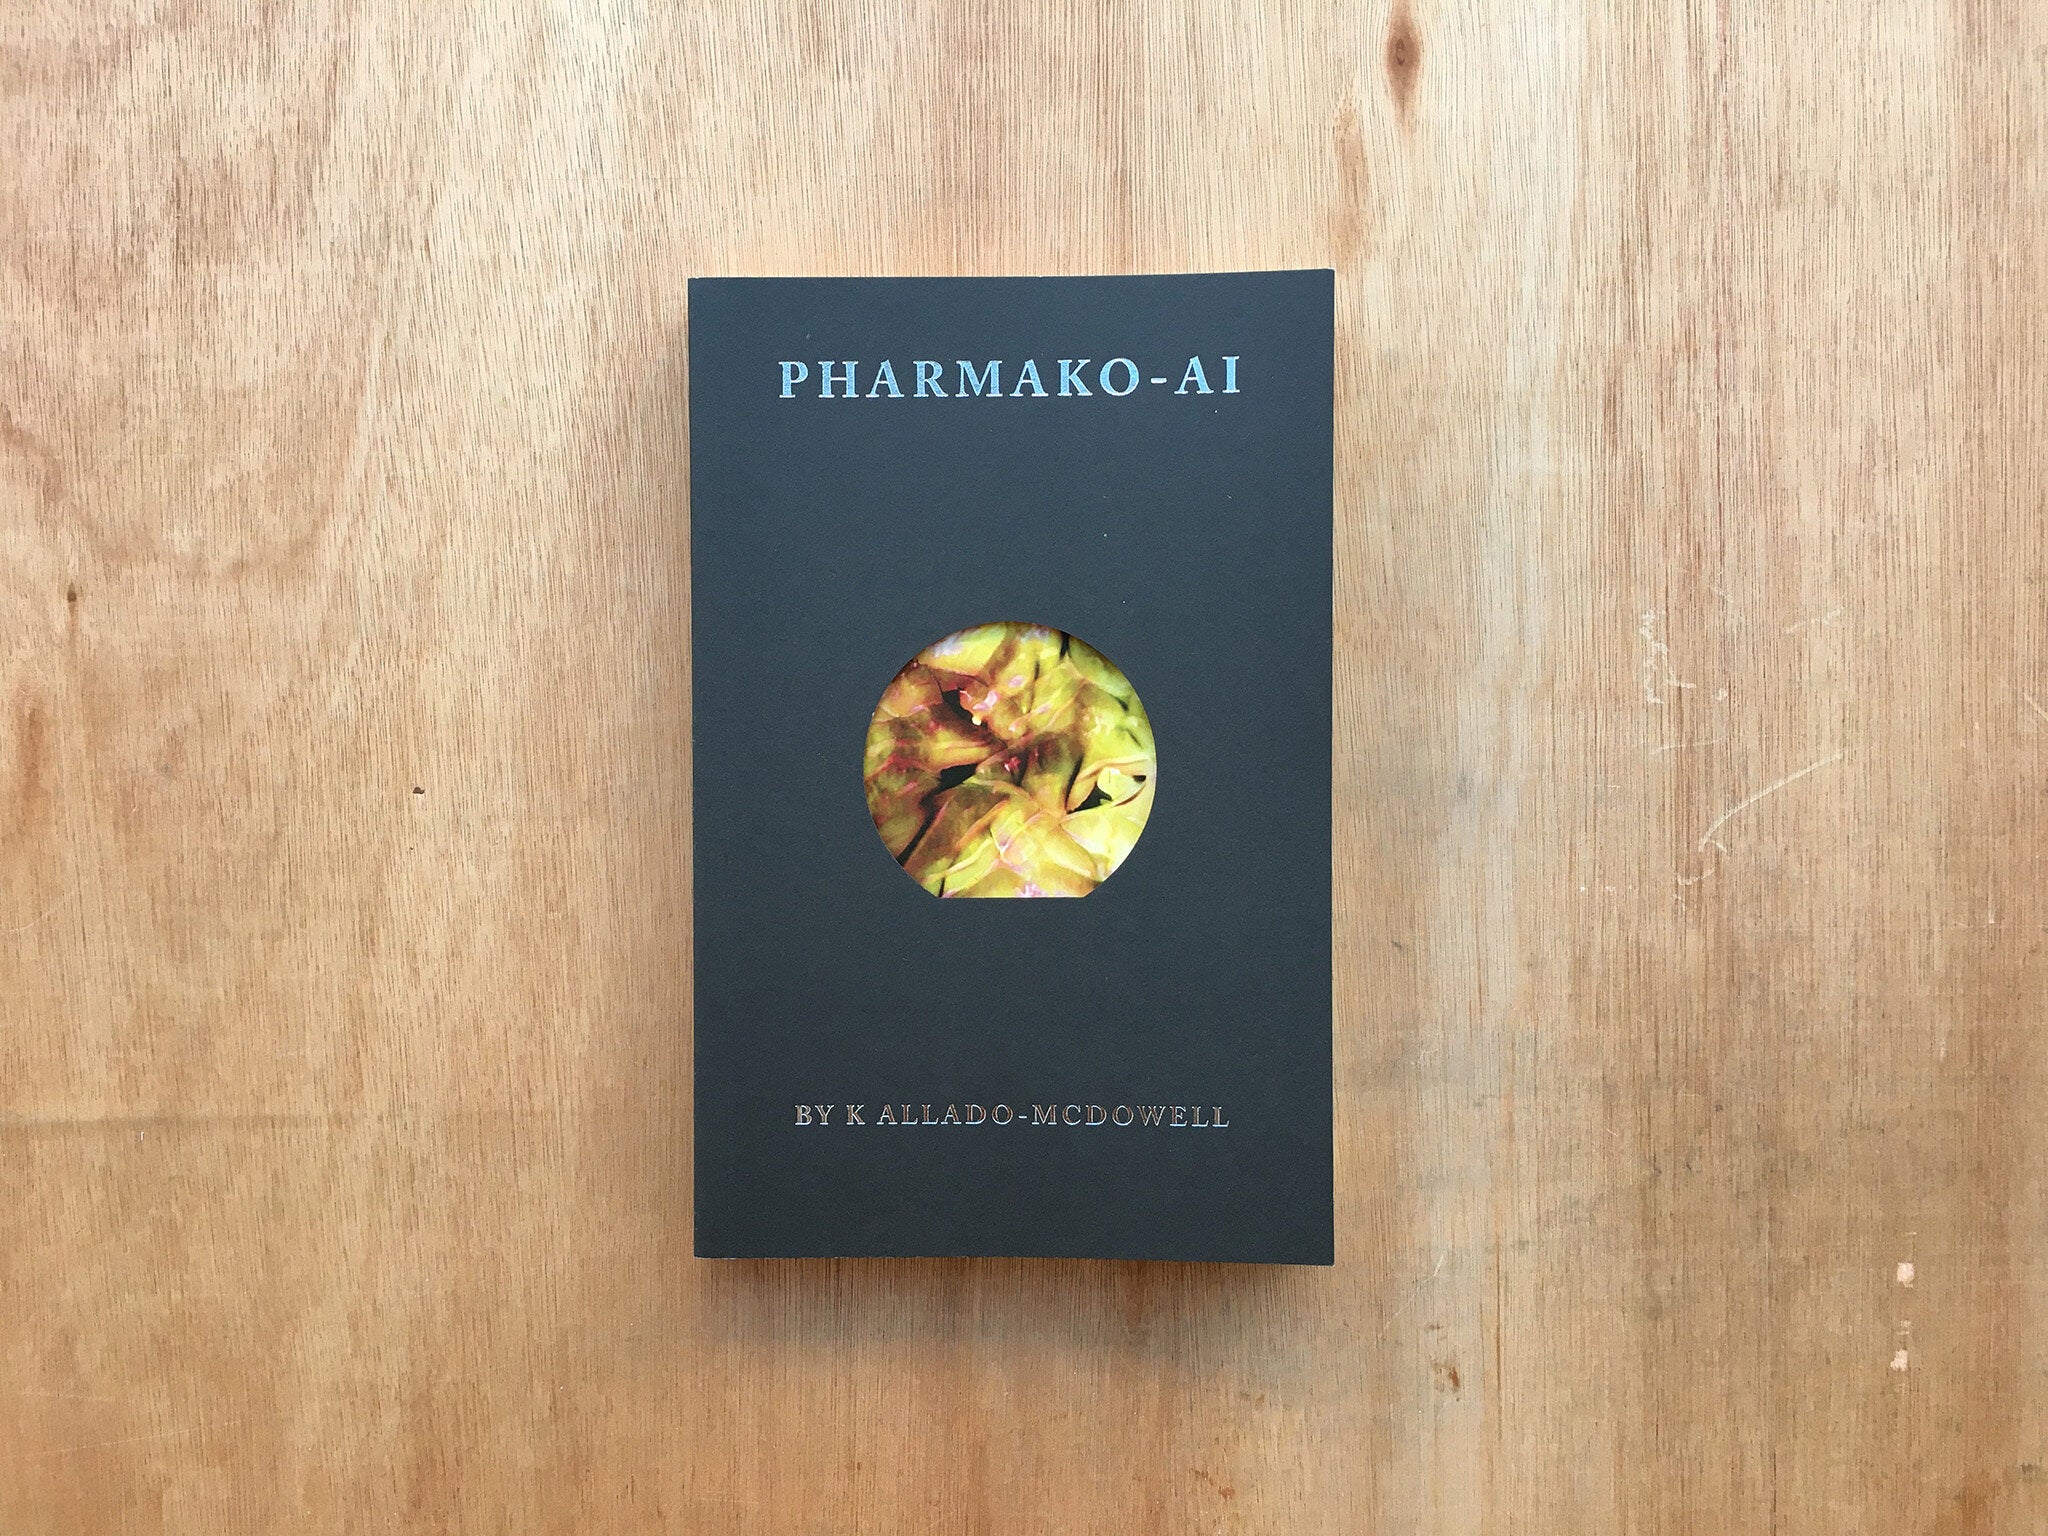 PHARMAKO-AI by K Allado McDowell